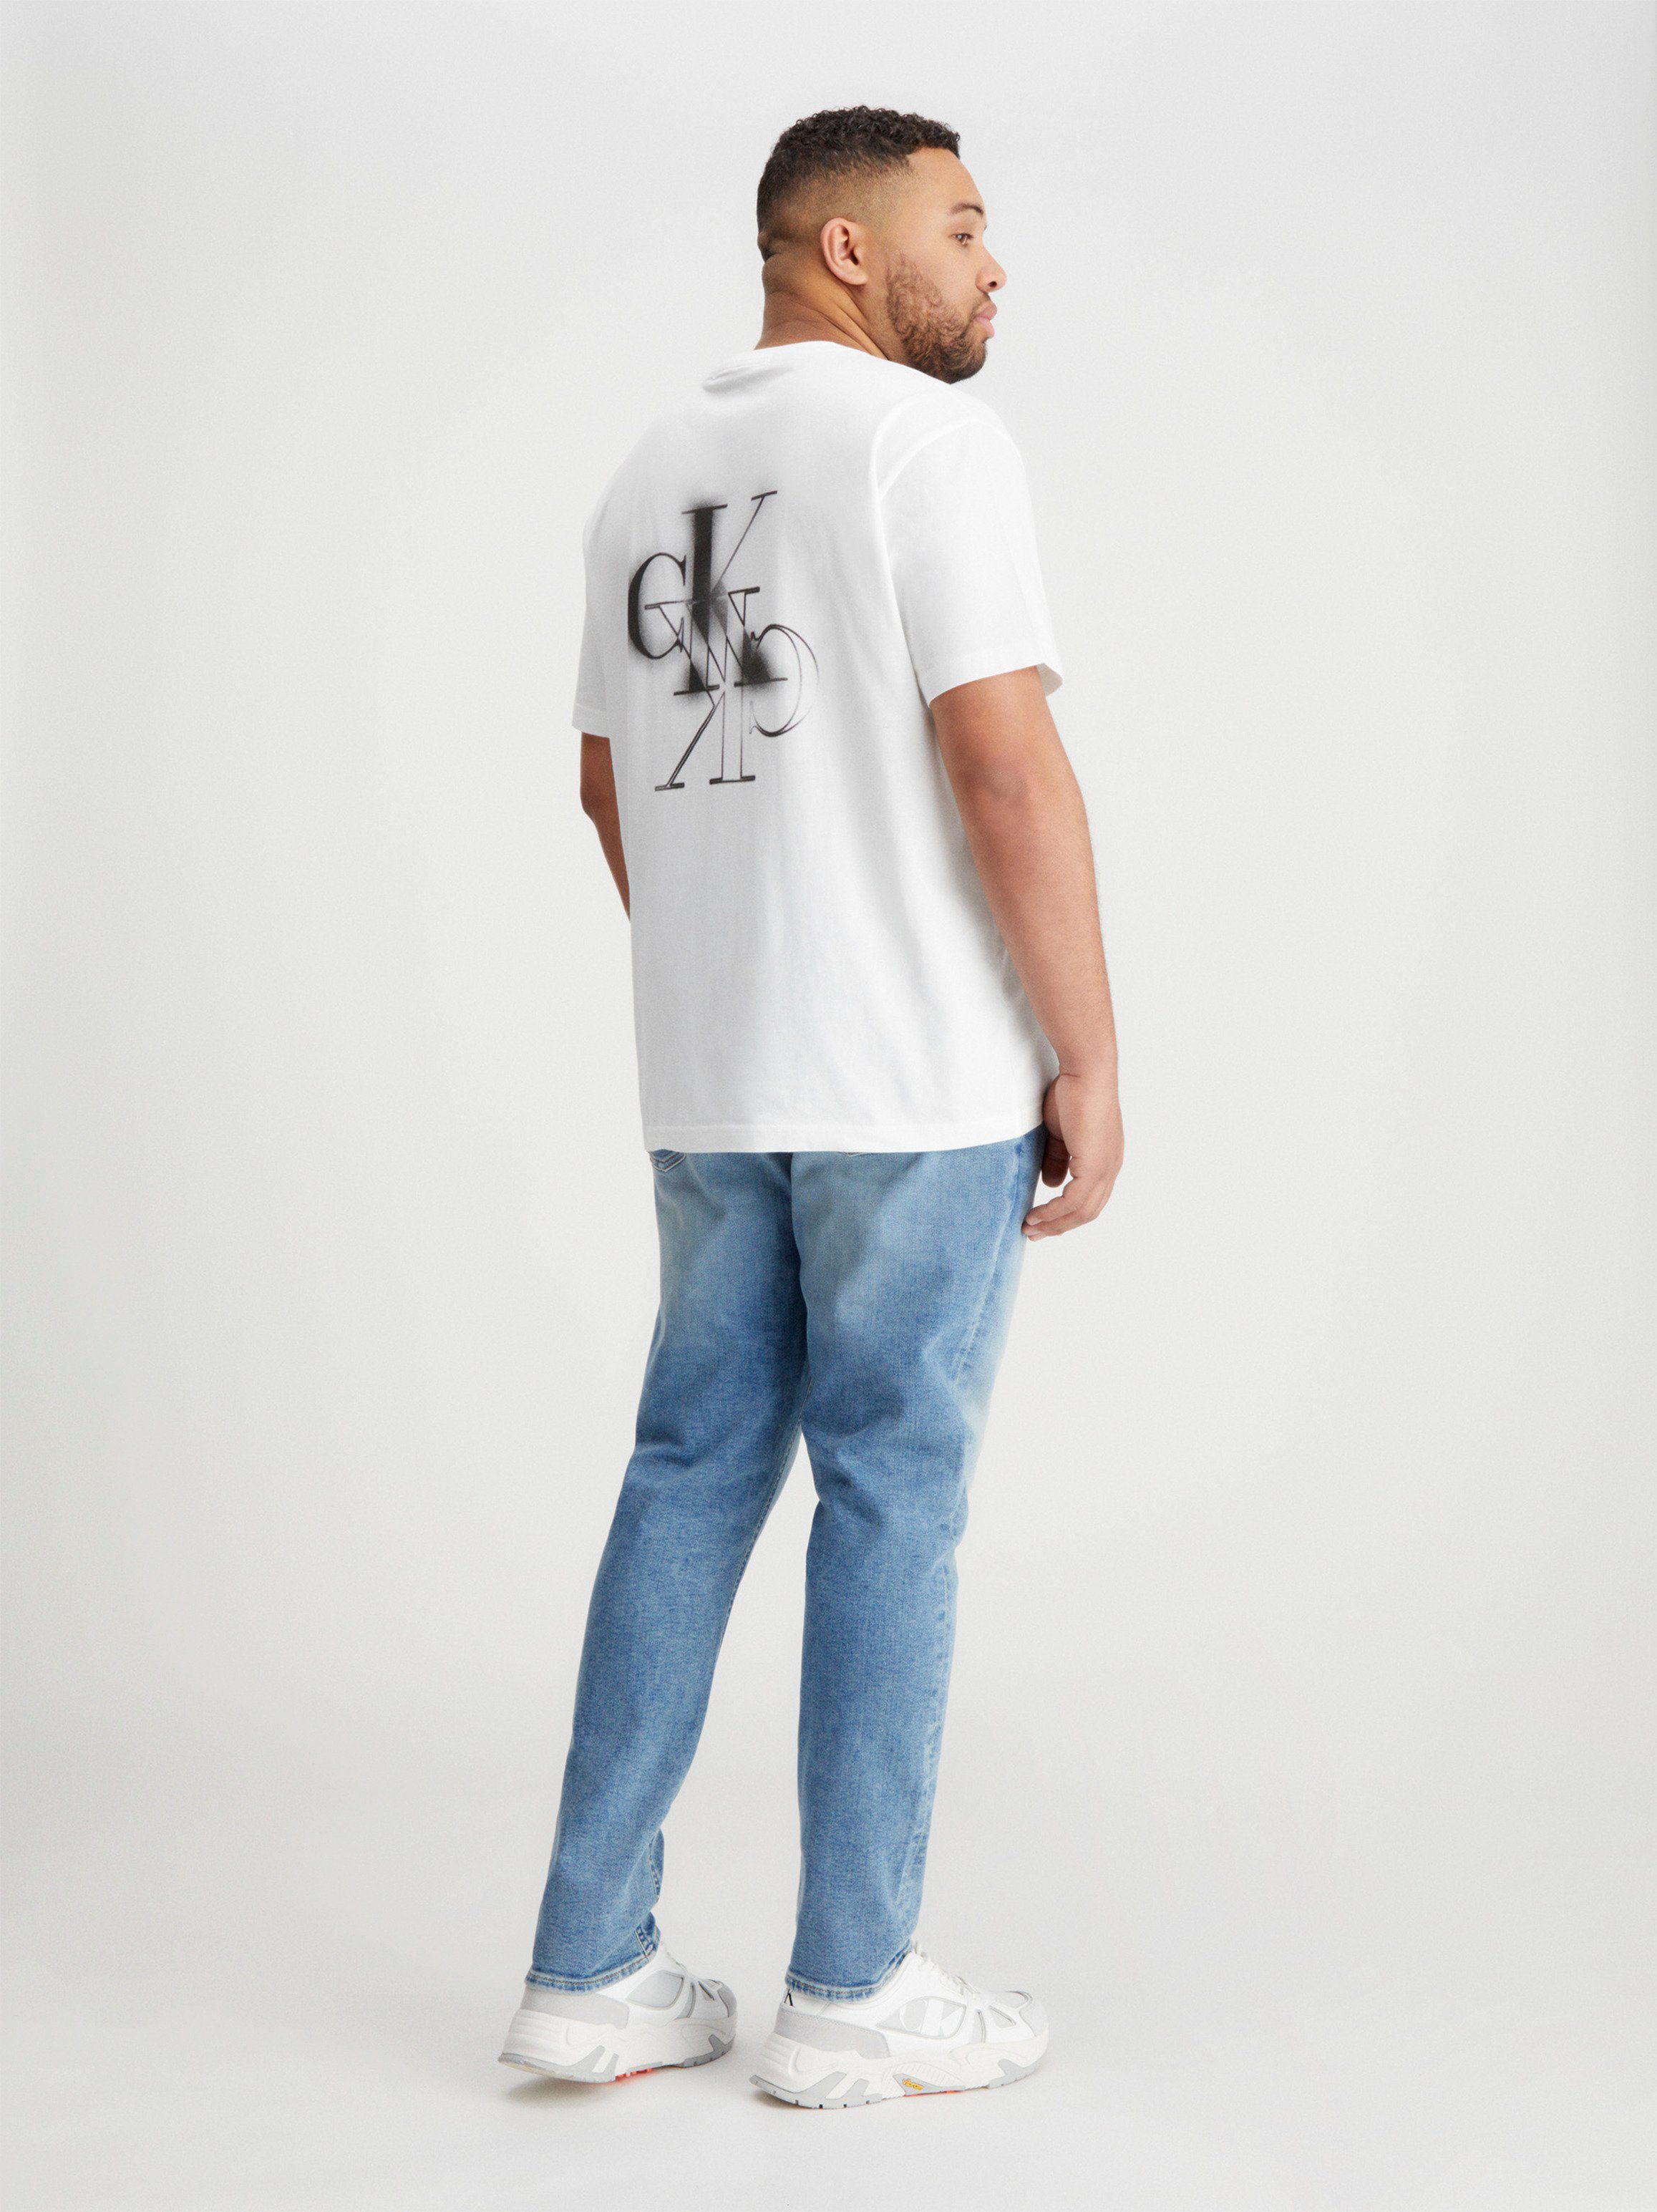 CK Klein TEE White T-Shirt Bright Jeans LOGO Plus PLUS Calvin MIRRORED